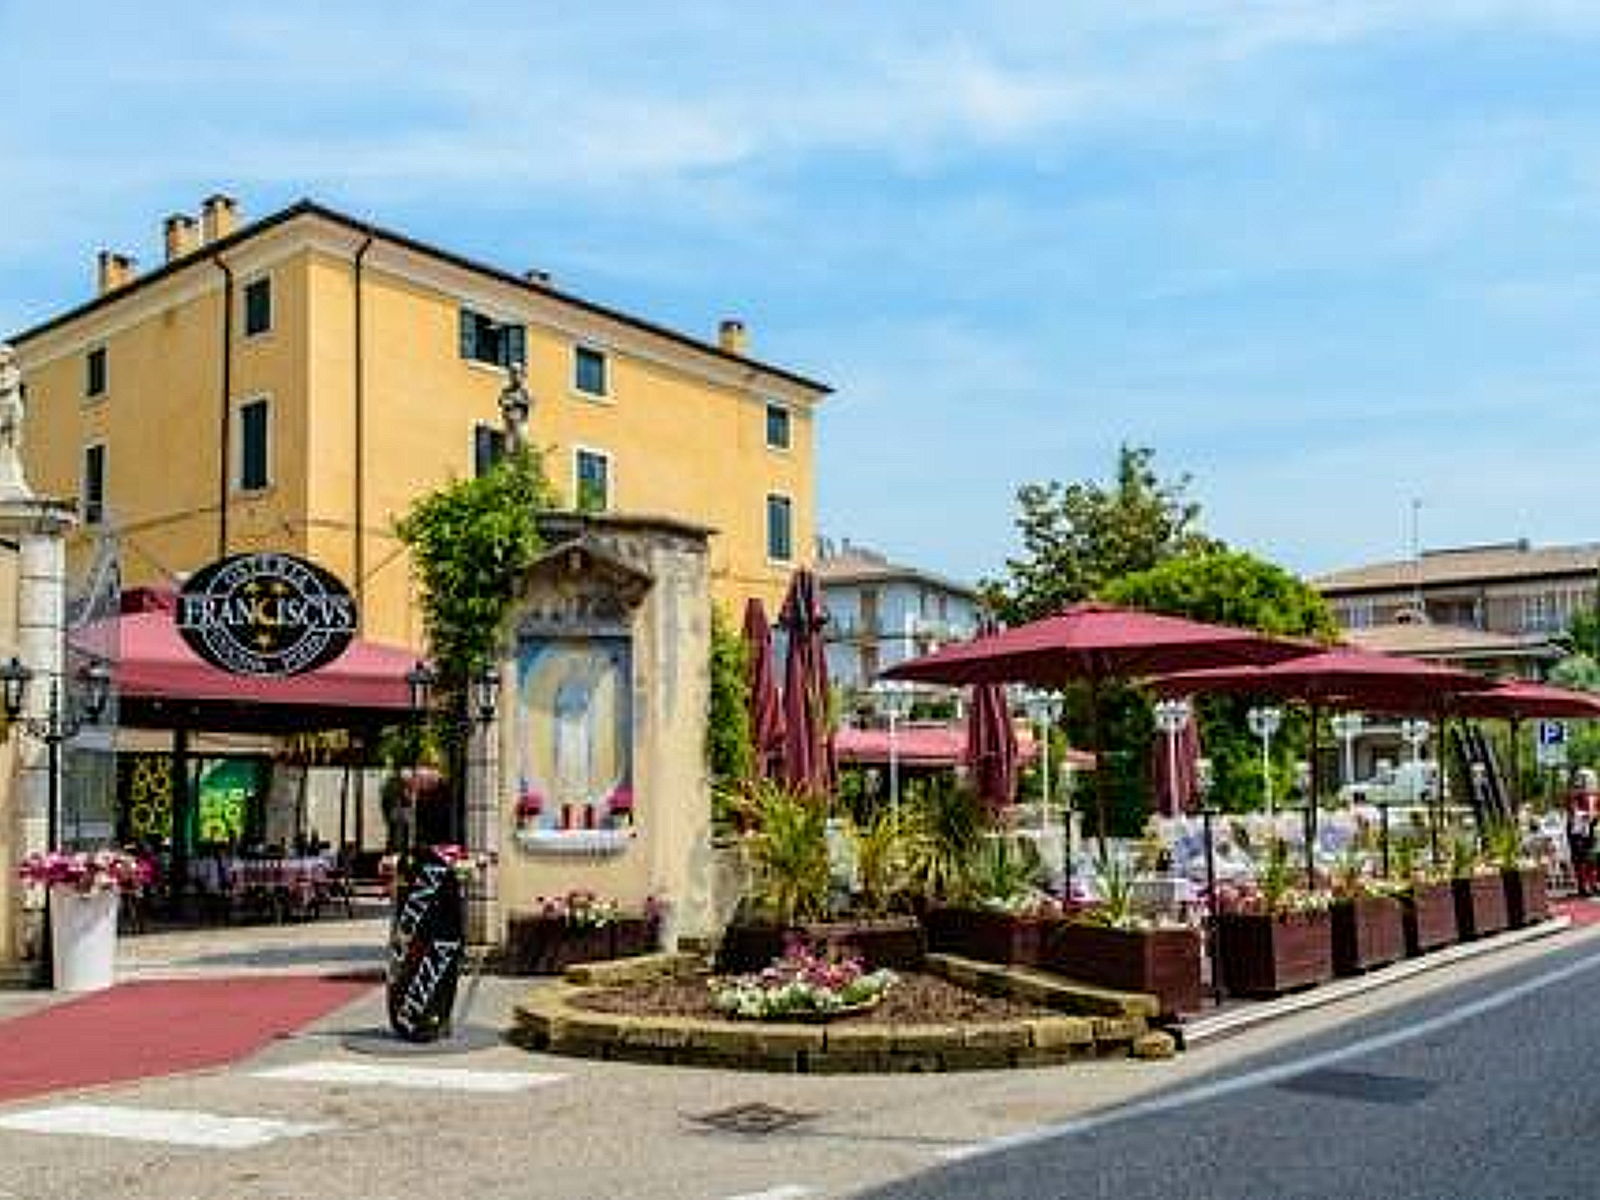 Restaurant Pizza Tavern Franciscus in Bardolino on Lake Garda